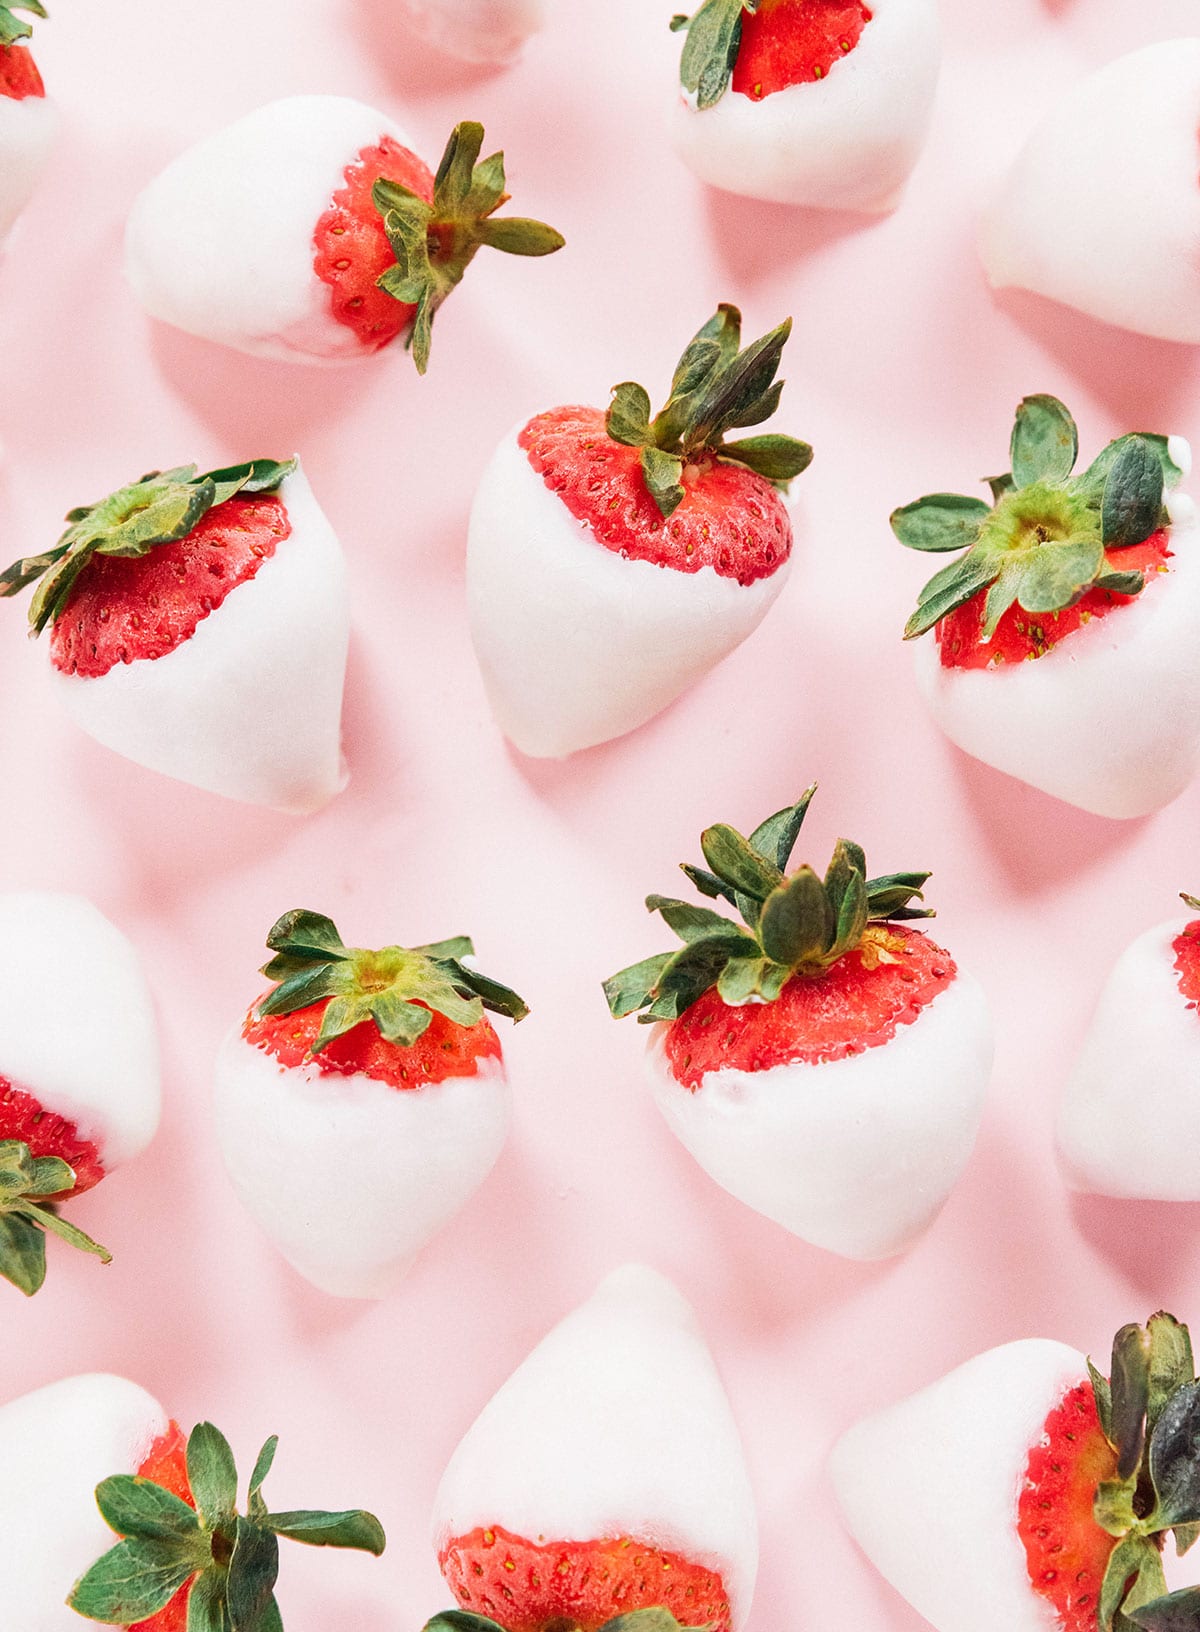 Frozen Yogurt Covered Strawberries | Live Eat Learn